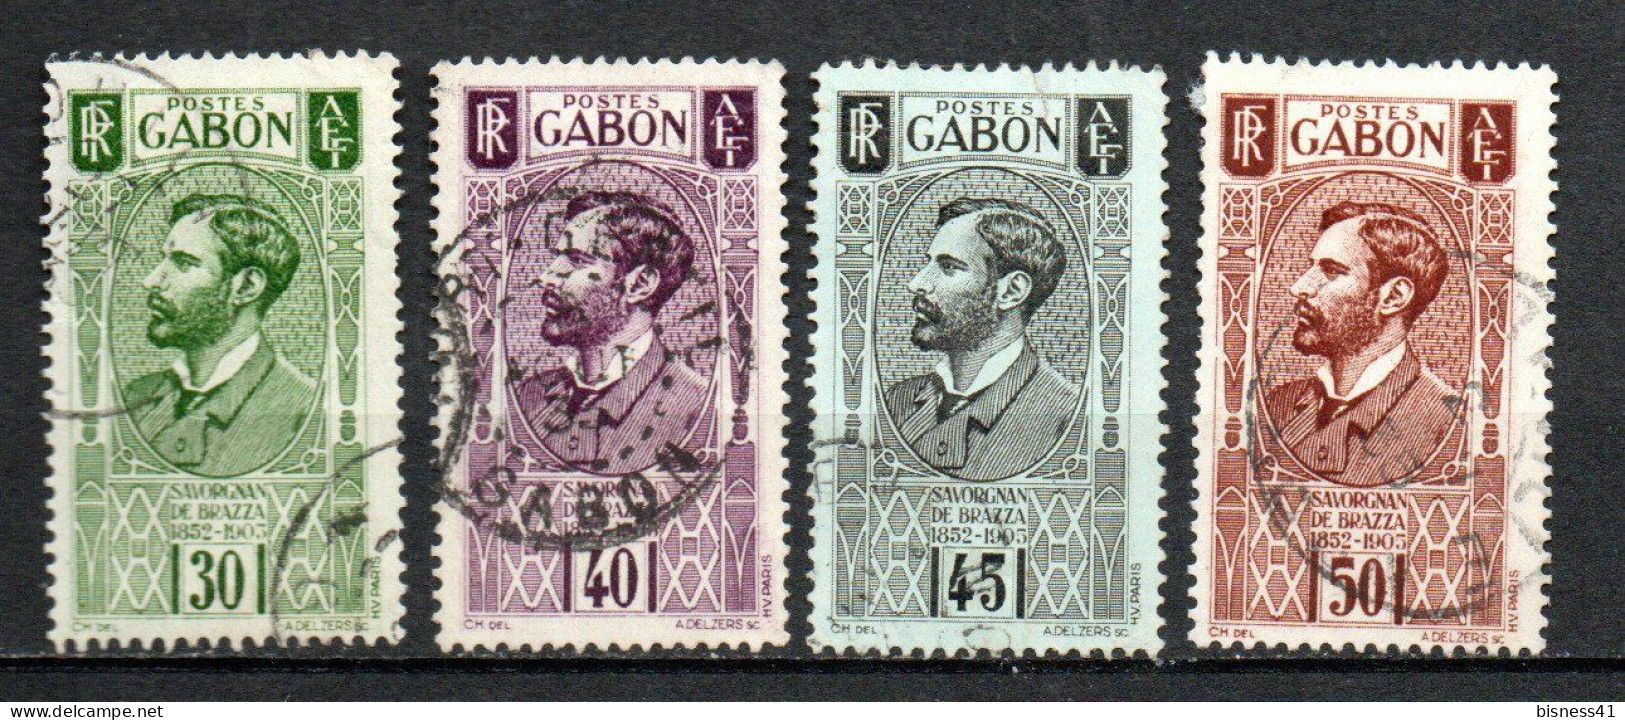 Col40 Colonie Gabon 1932 N° 133 à 136 Oblitéré Cote 8,00€ - Usati